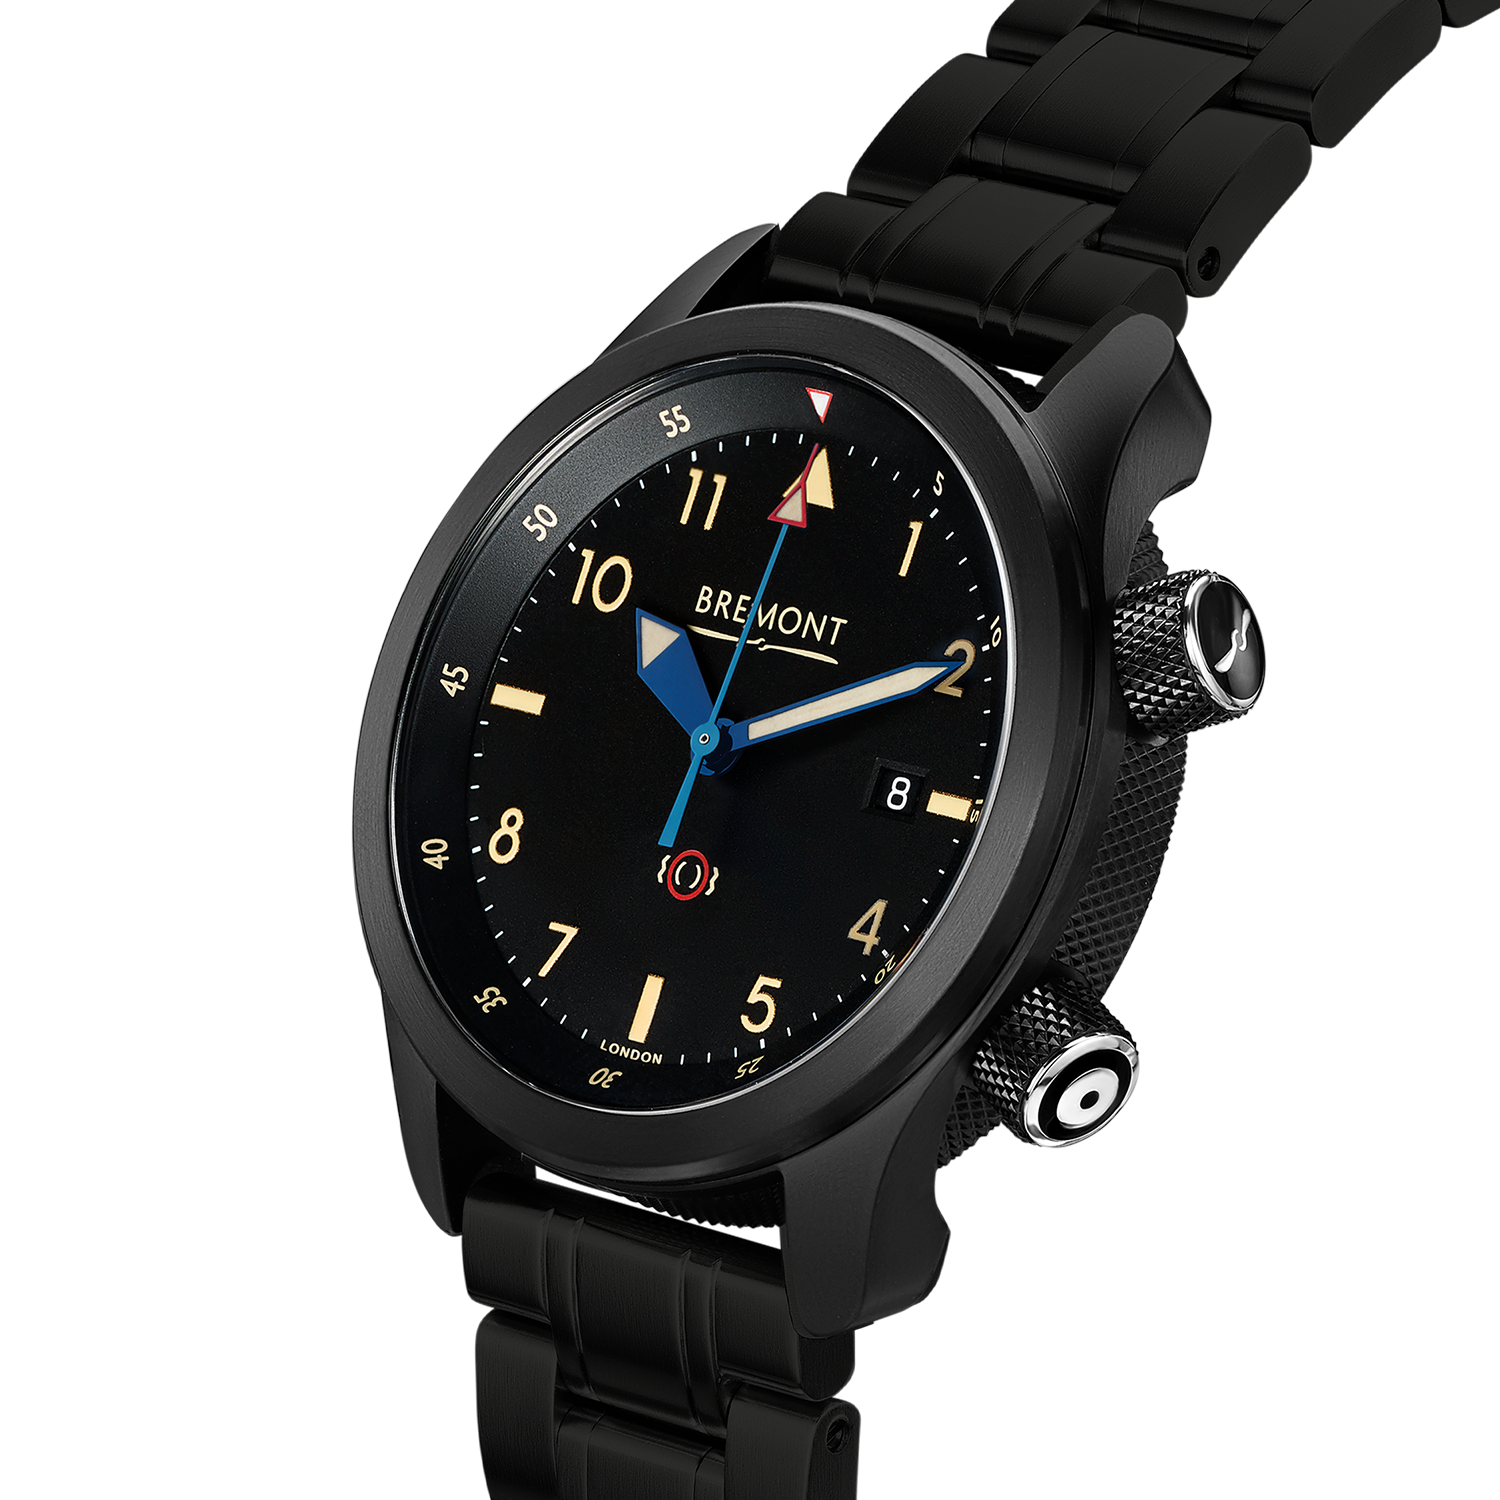 U-2/51-JET Black Pilot's Watch Bracelet